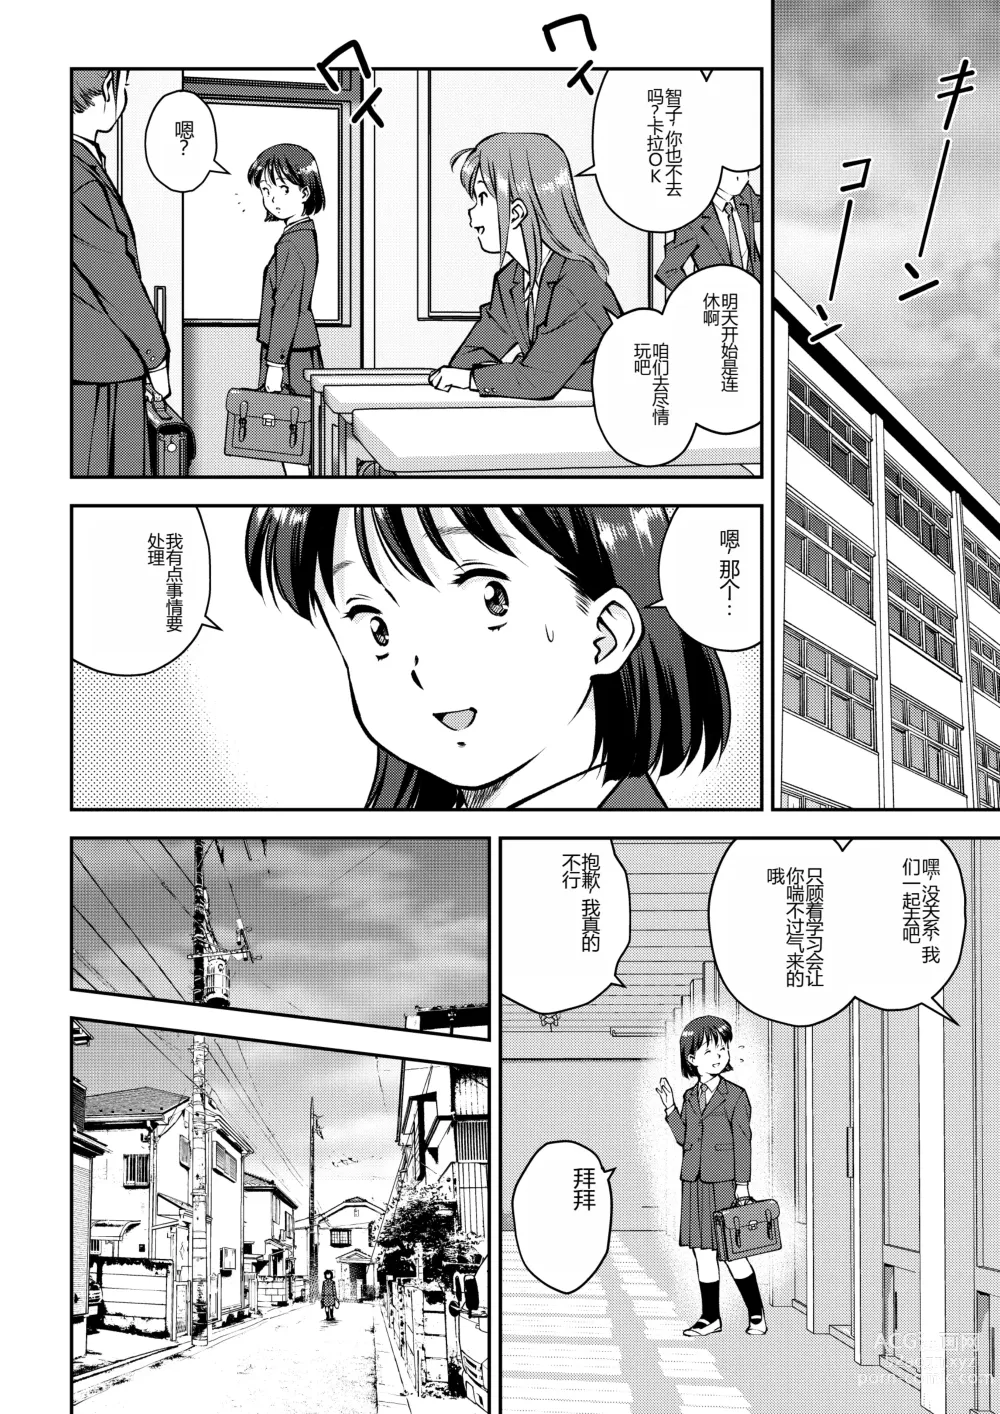 Page 2 of manga Unko Mamire de Orusuban